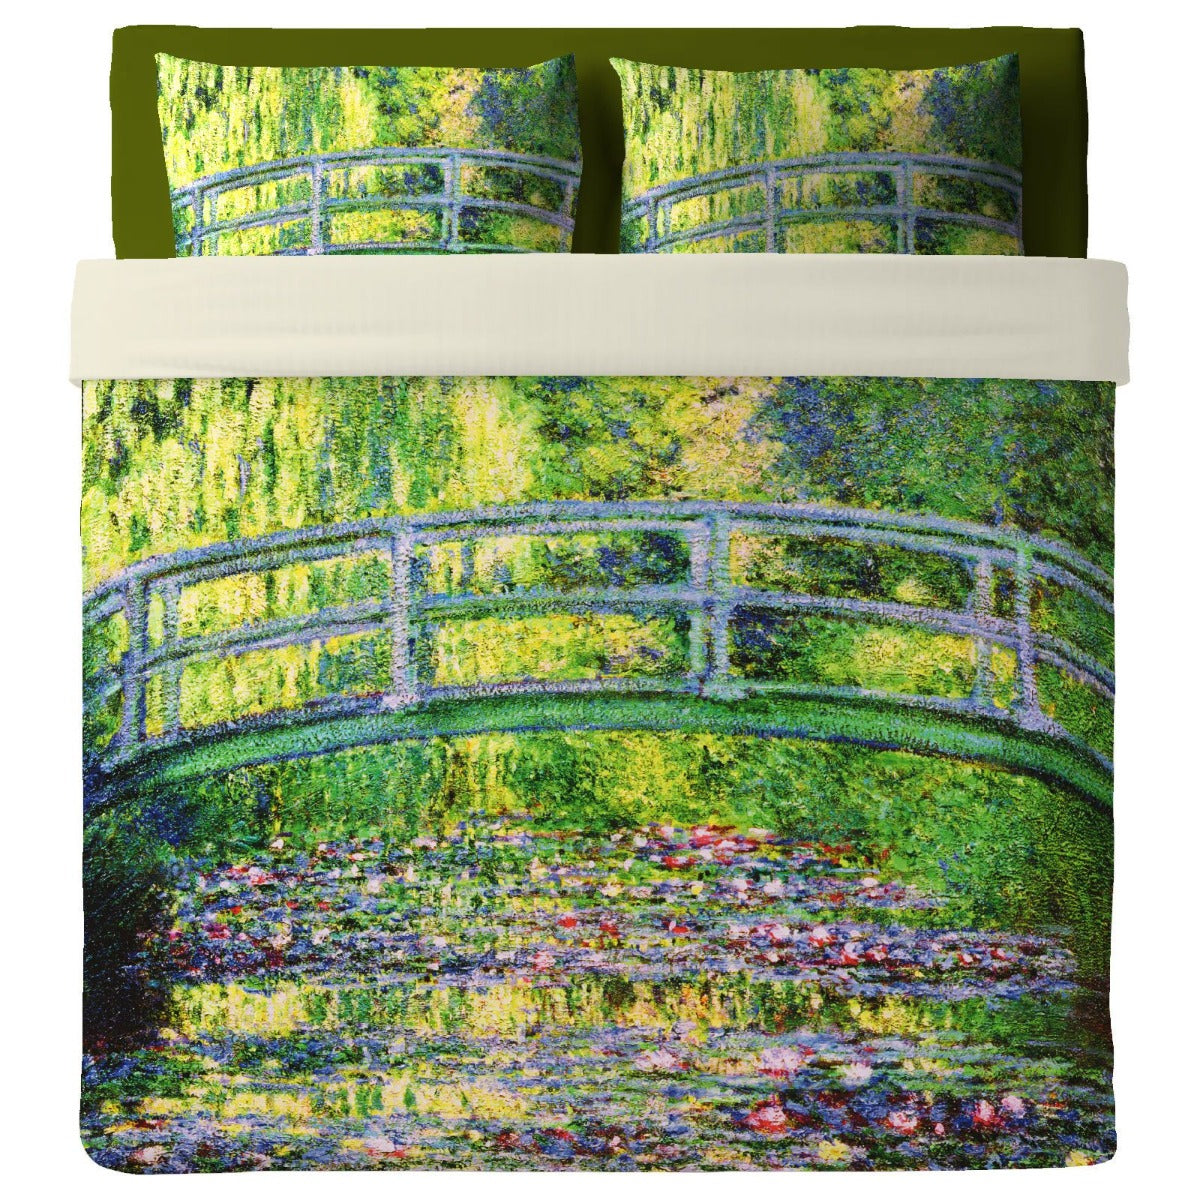 Monet Bedsheet with Pillowcases - Japanese Bridge